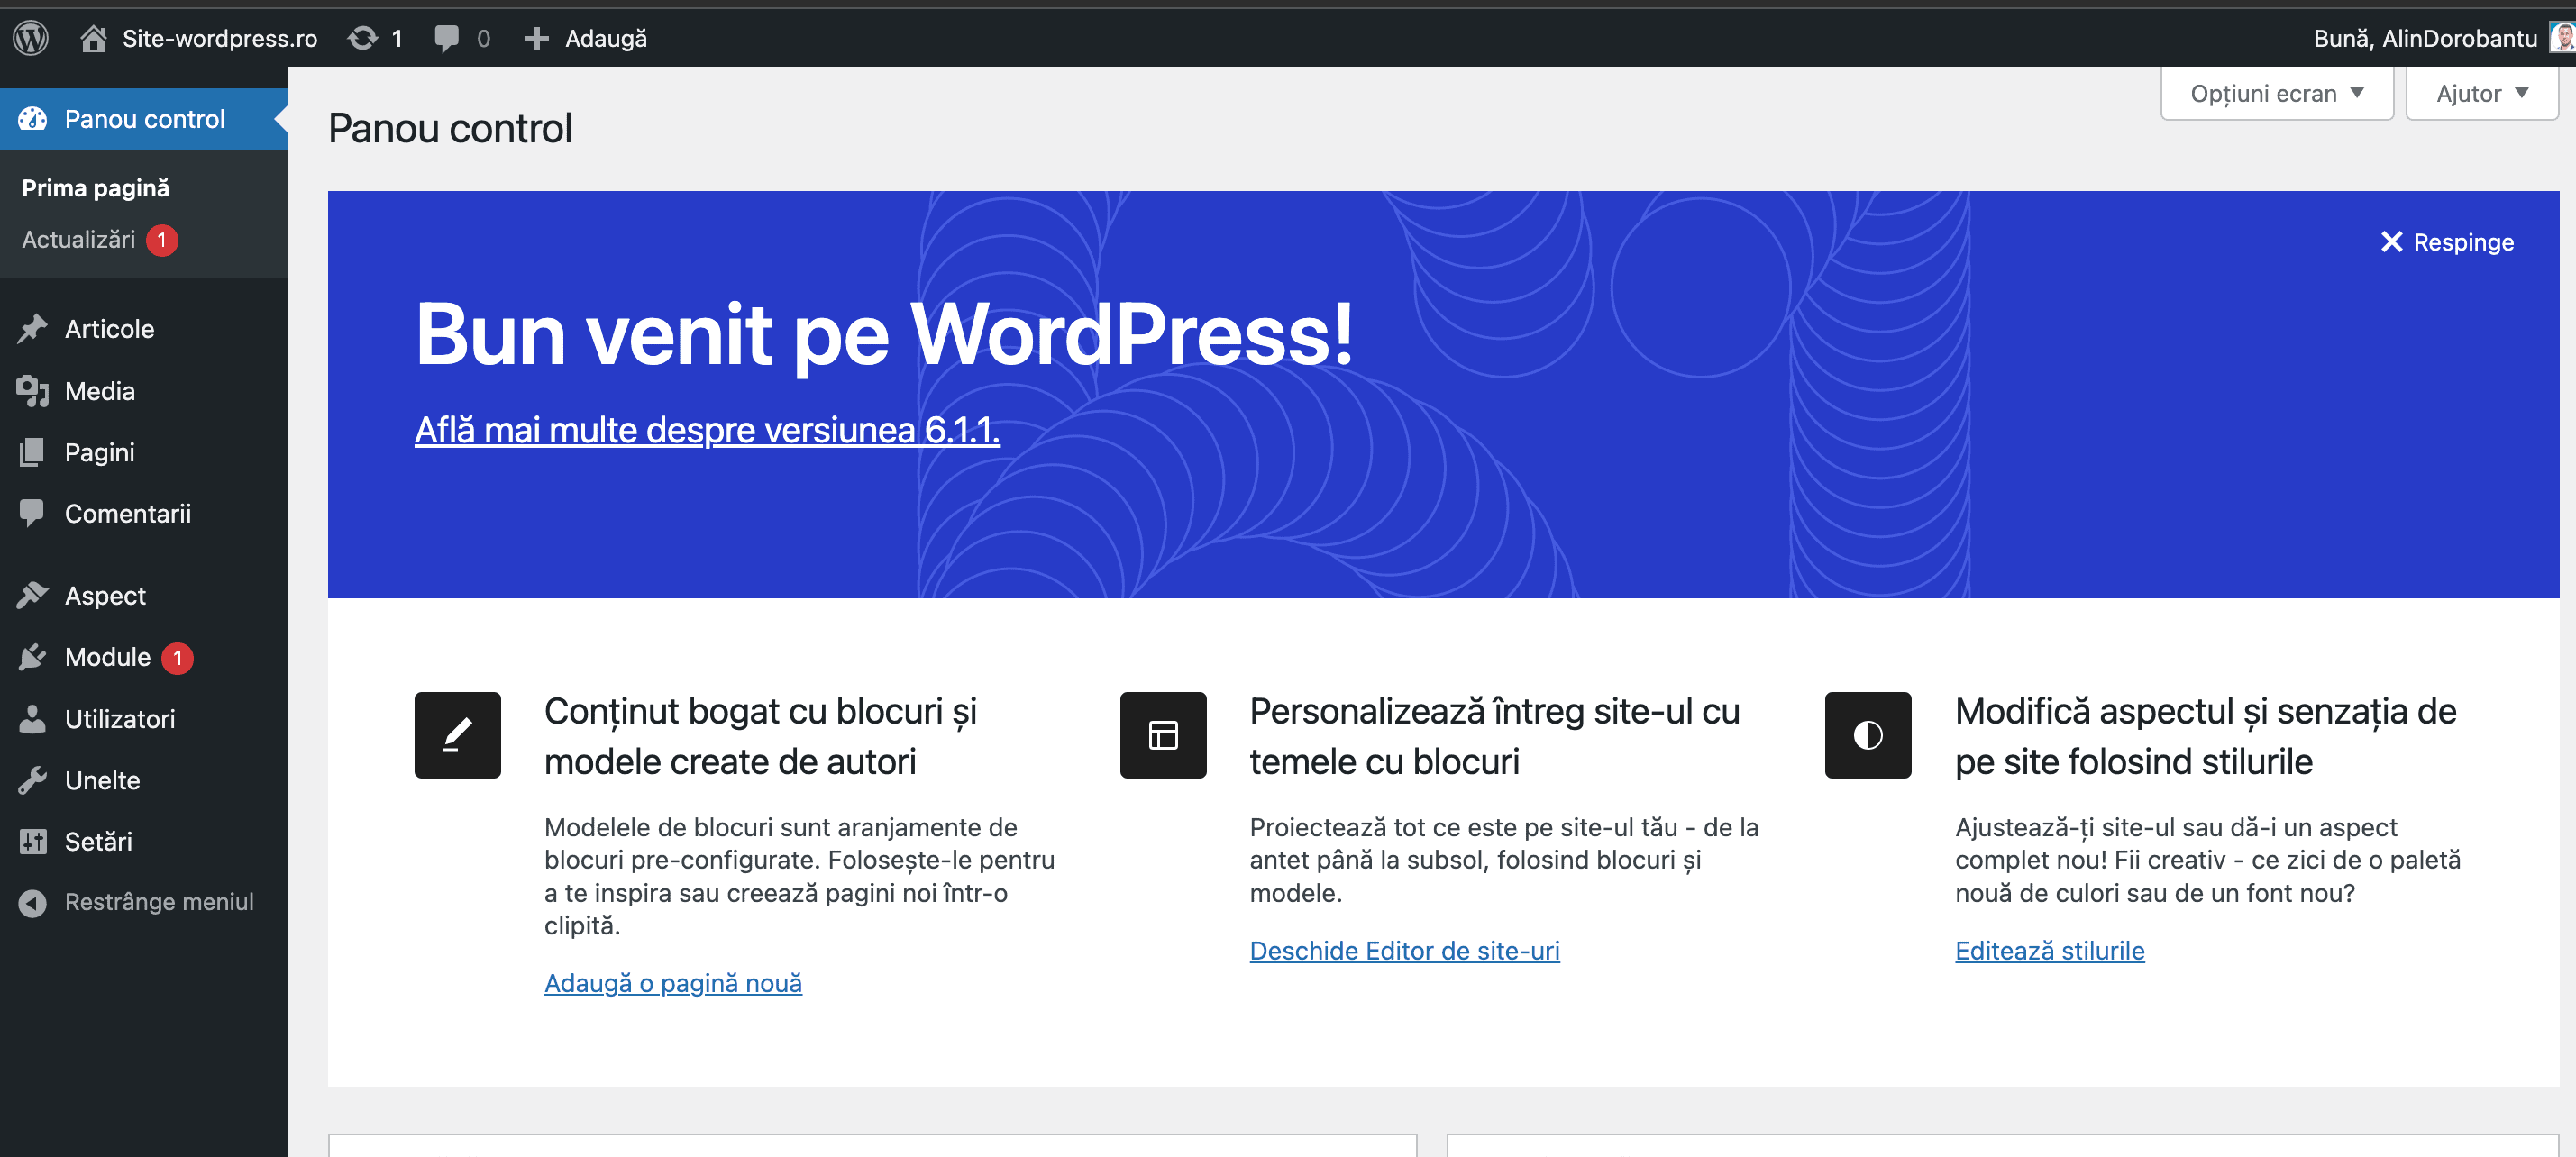 Installing a WordPress from scratch